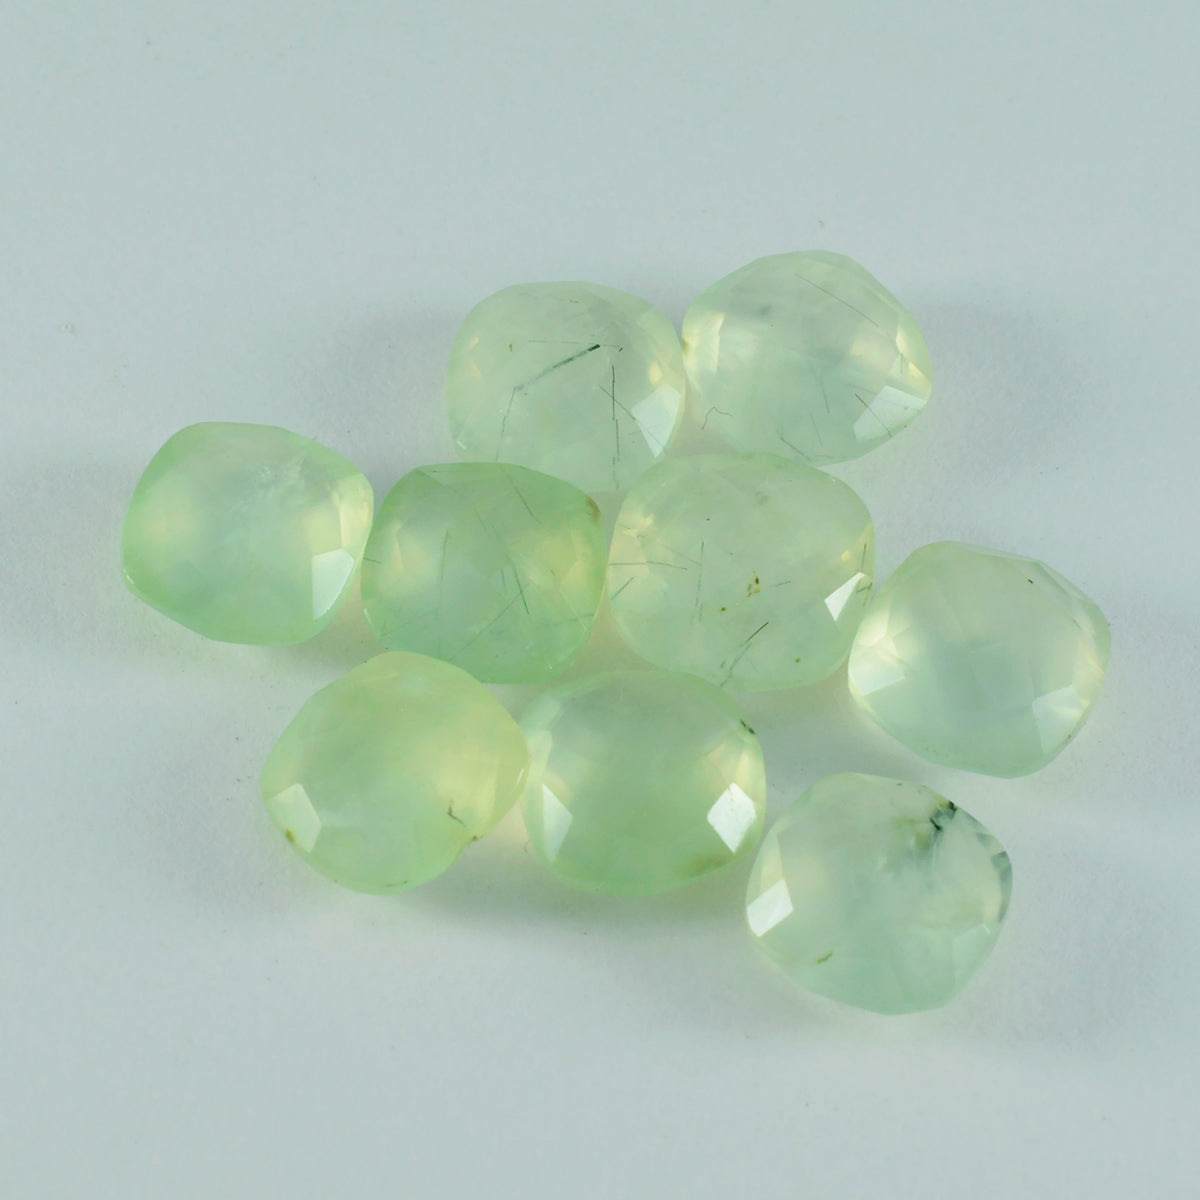 riyogems 1 pezzo di prehnite verde sfaccettato 5x5 mm forma cuscino gemma di qualità A+